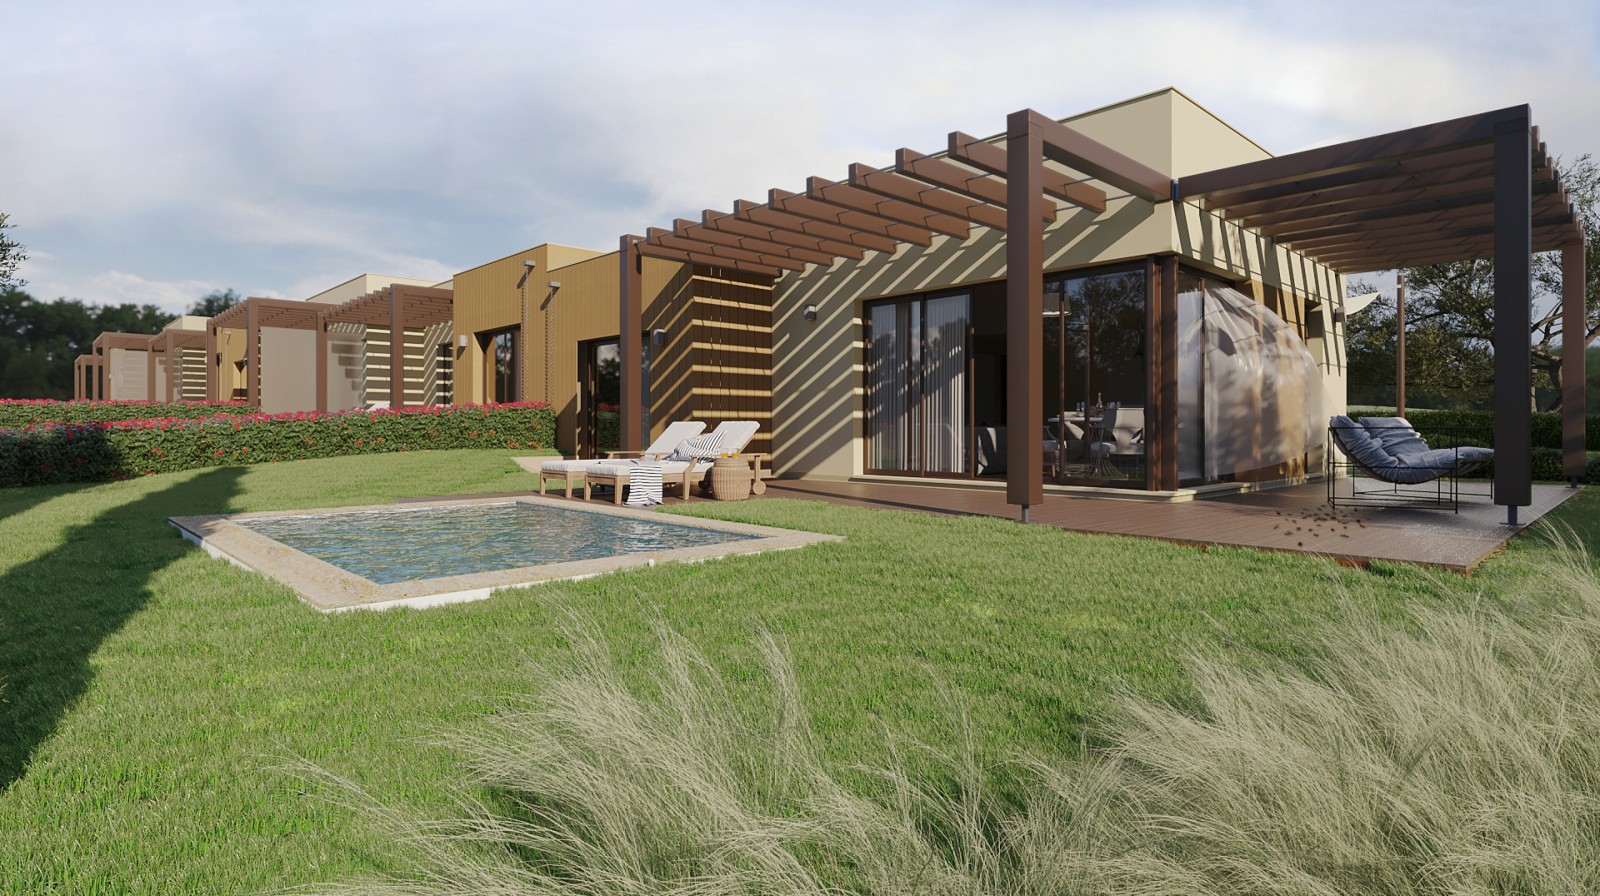 2 bedroom semi-detached villa with swimming pool for sale in Golf resort, Algarve_218827